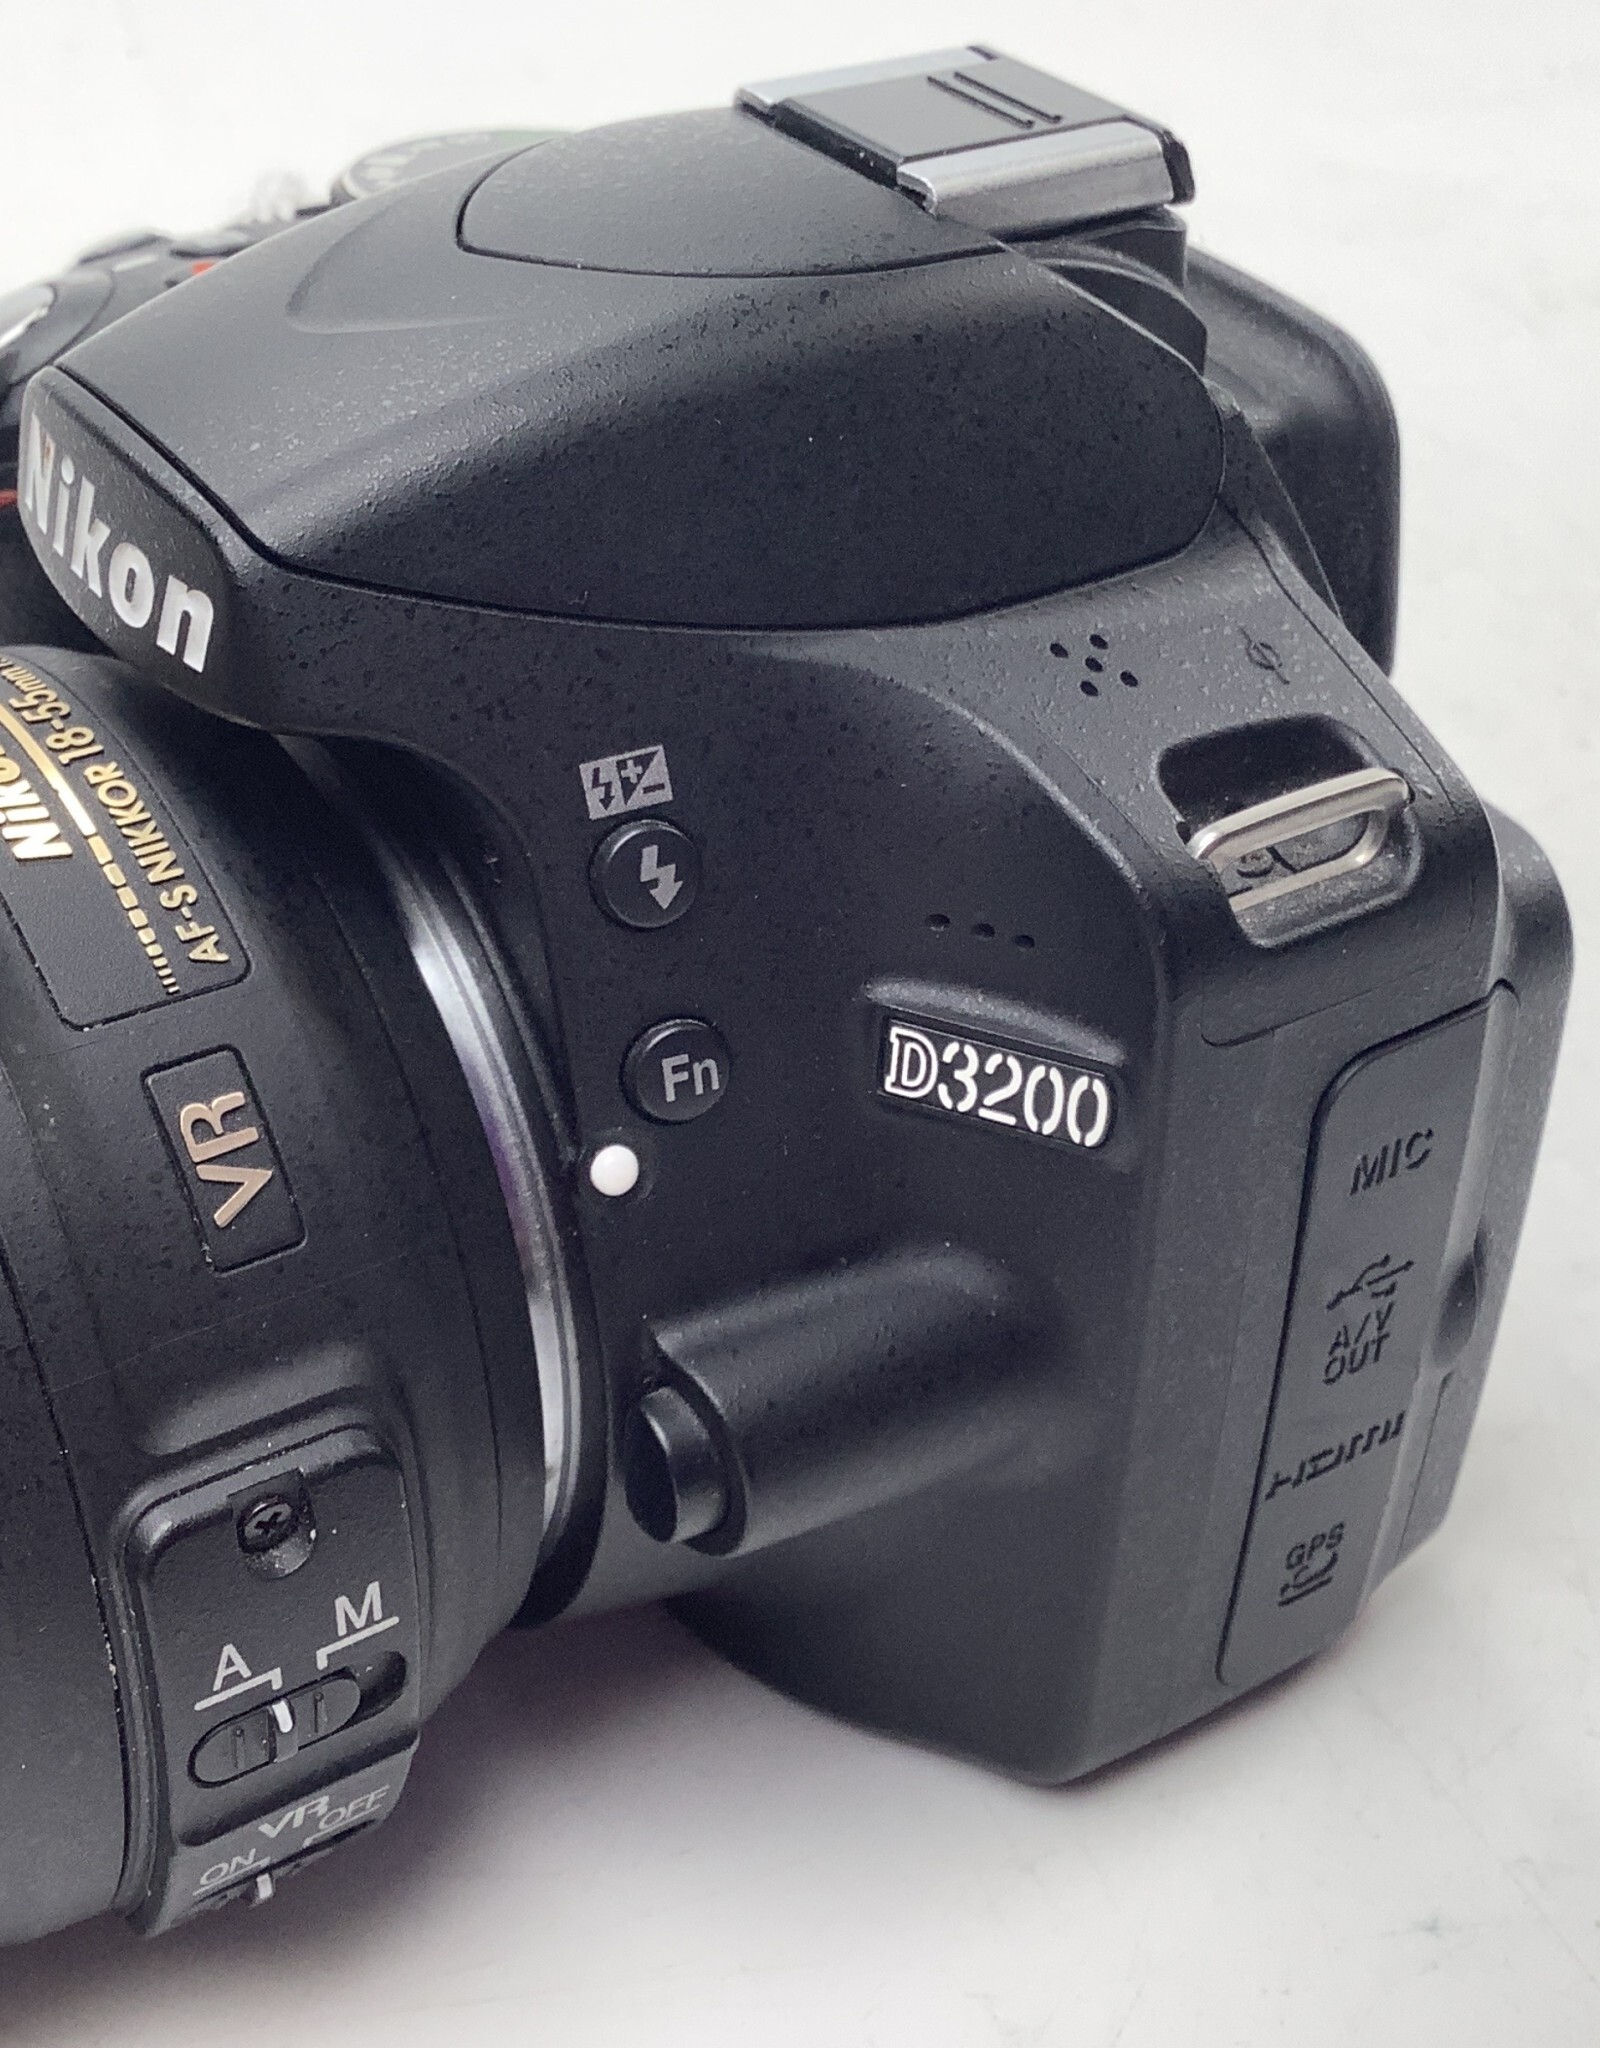 NIKON Nikon D3200 Camera with 18-55mm Lens Used Good